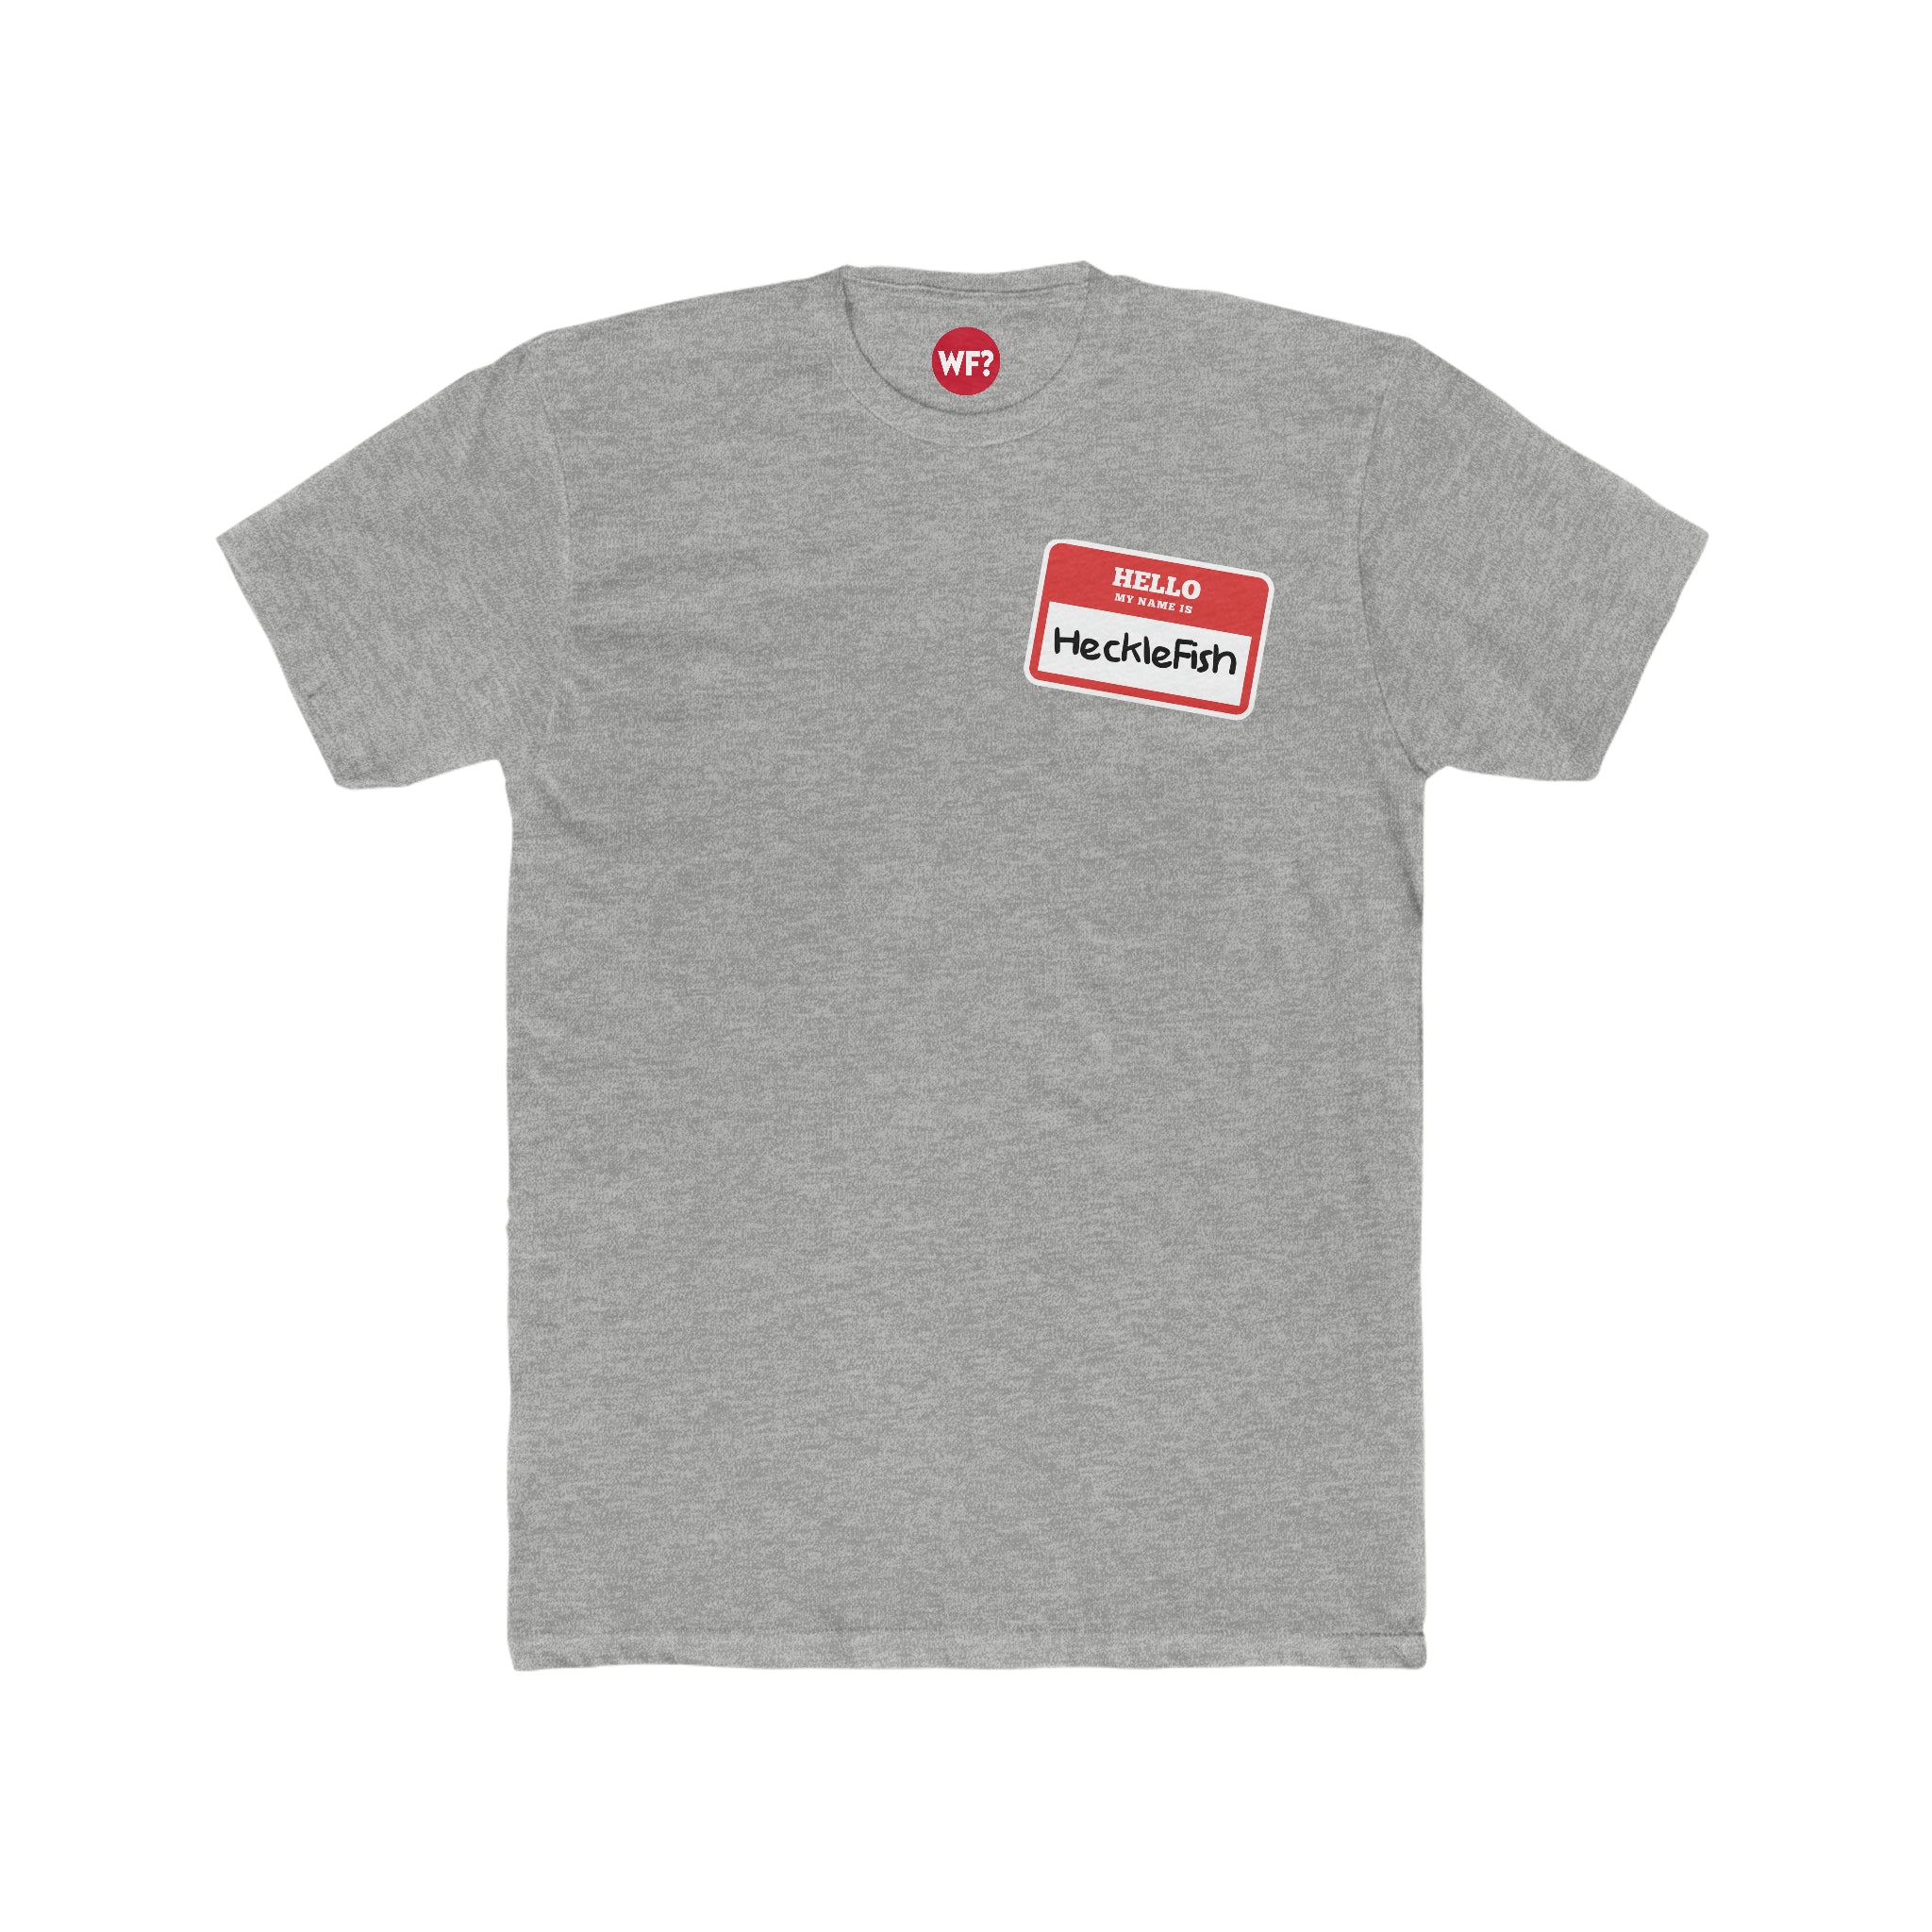 Hecklefish Nametag Unisex T-Shirt